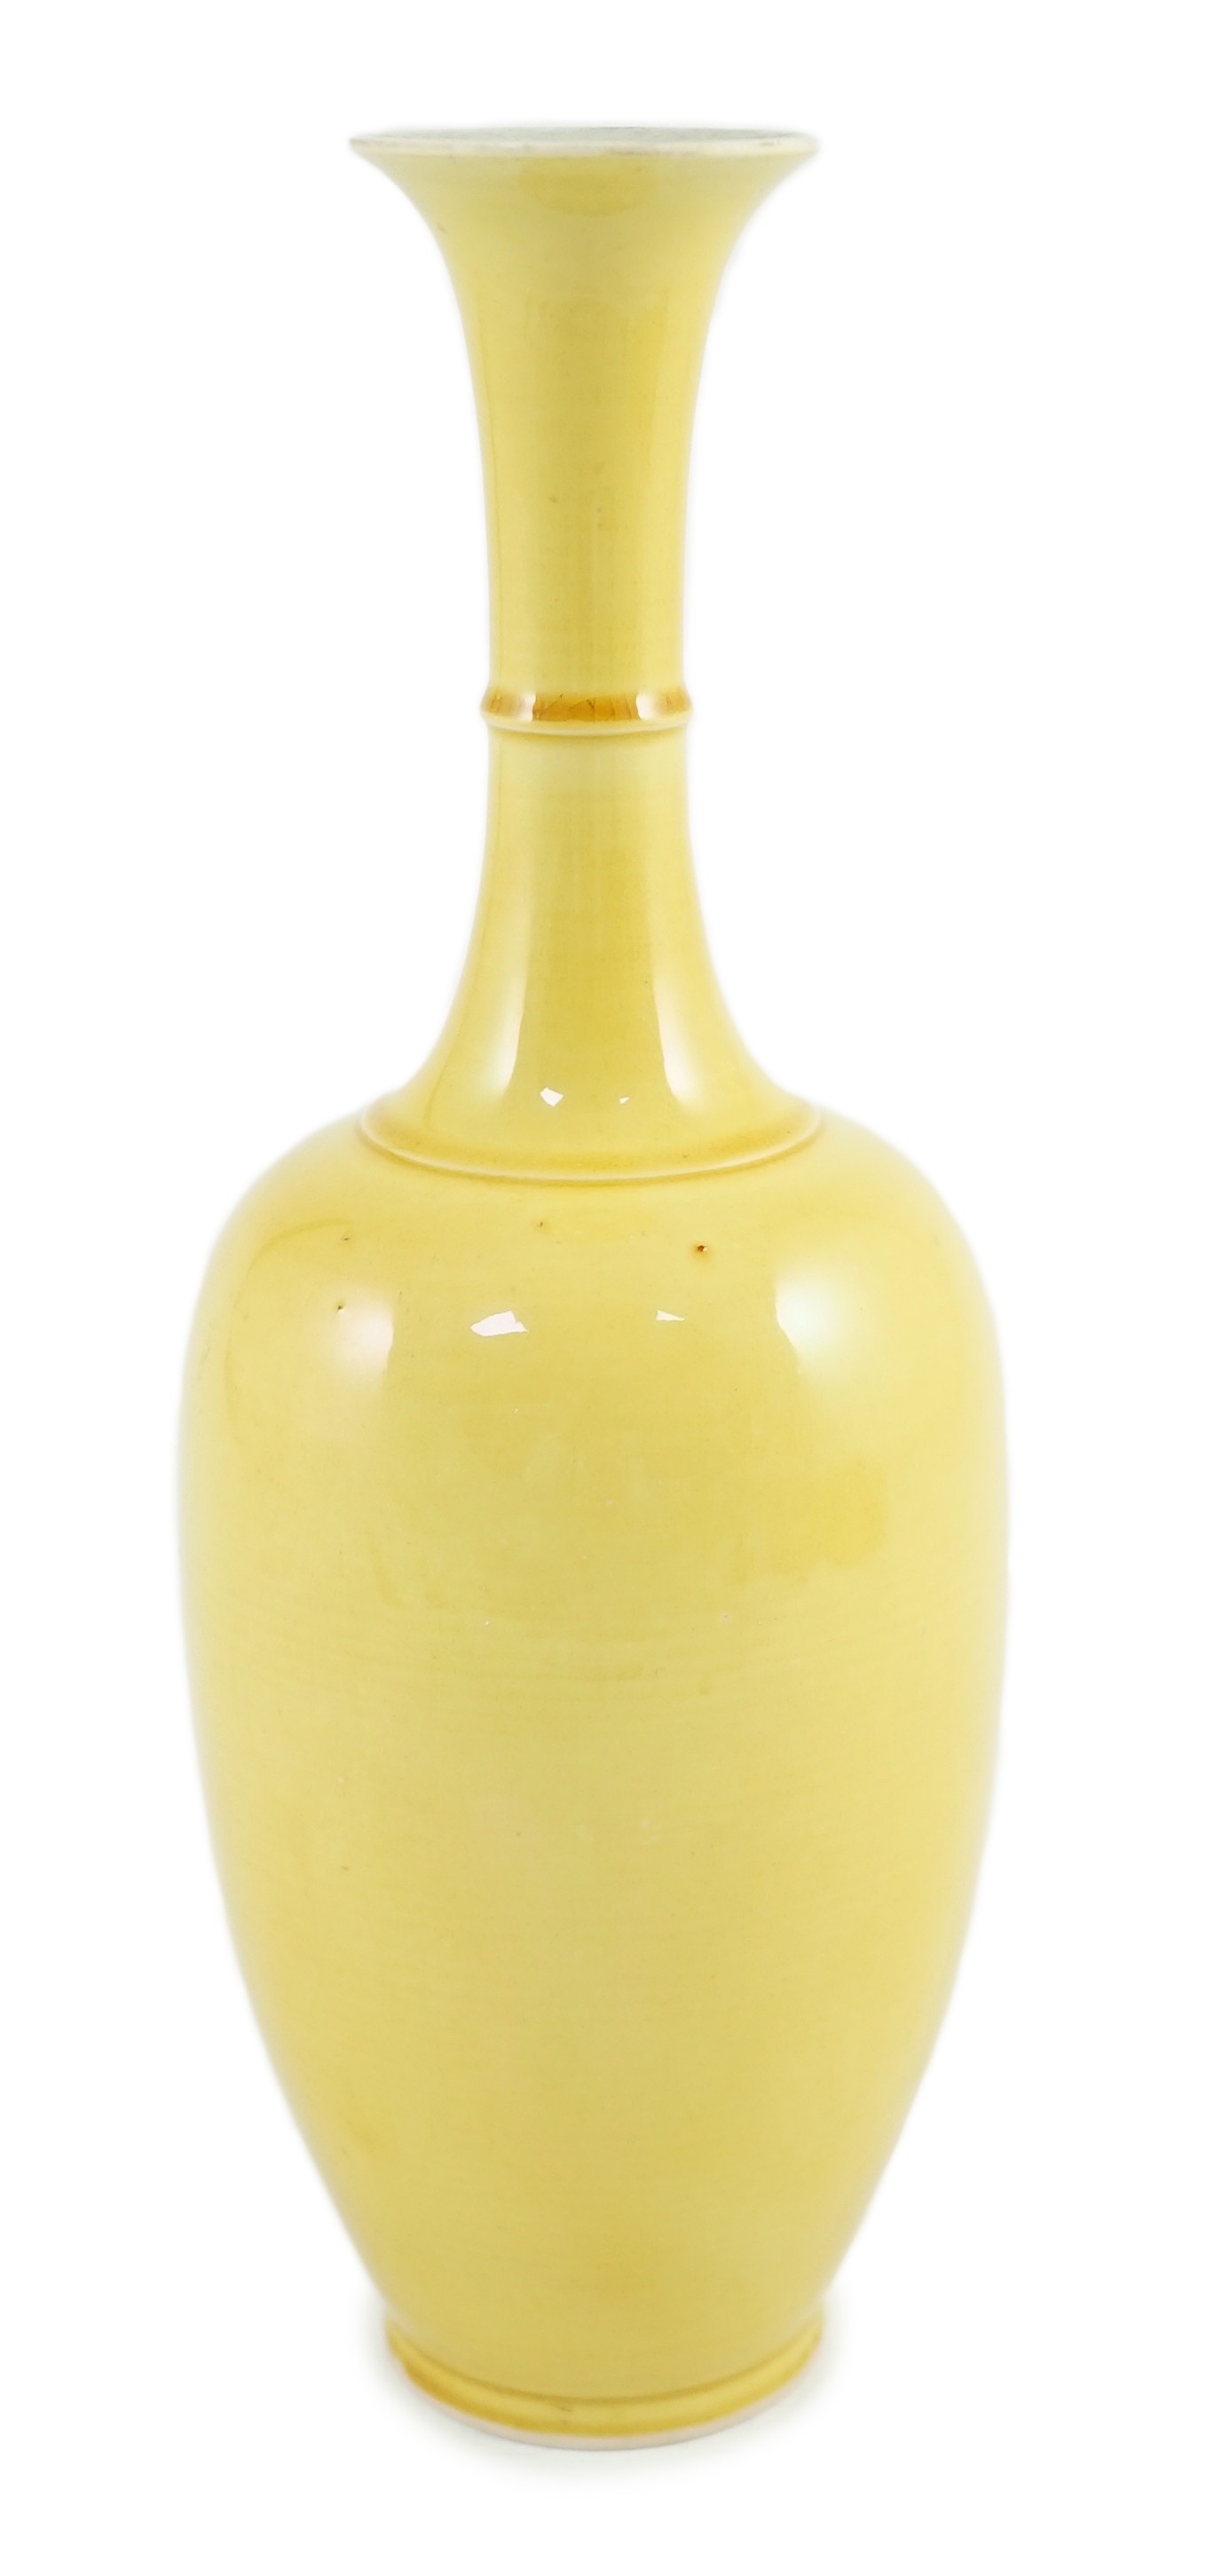 A Chinese yellow glazed bottle vase, Kangxi mark possibly Republic period